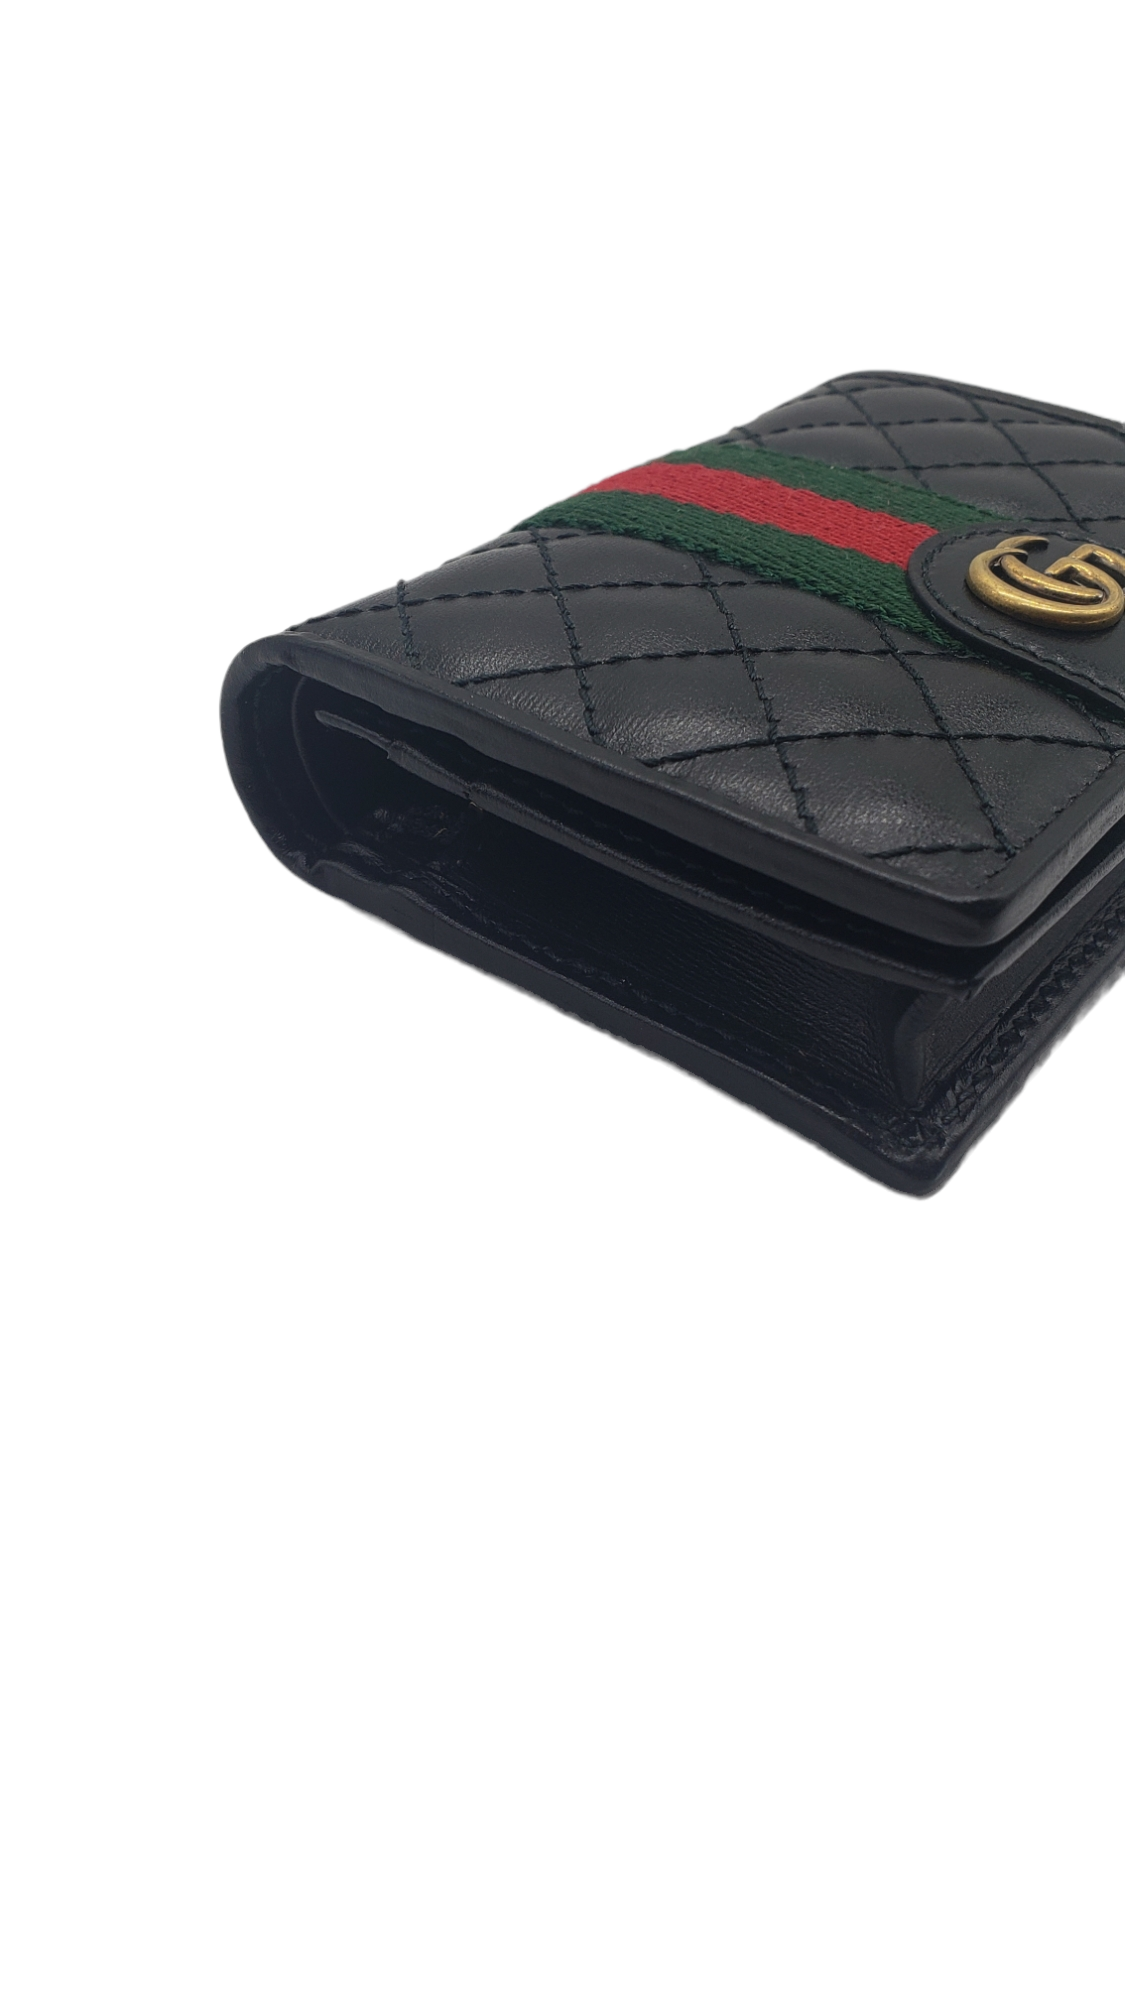 Gucci Black Leather Quilted Trapuntata Web Stripe Card Case